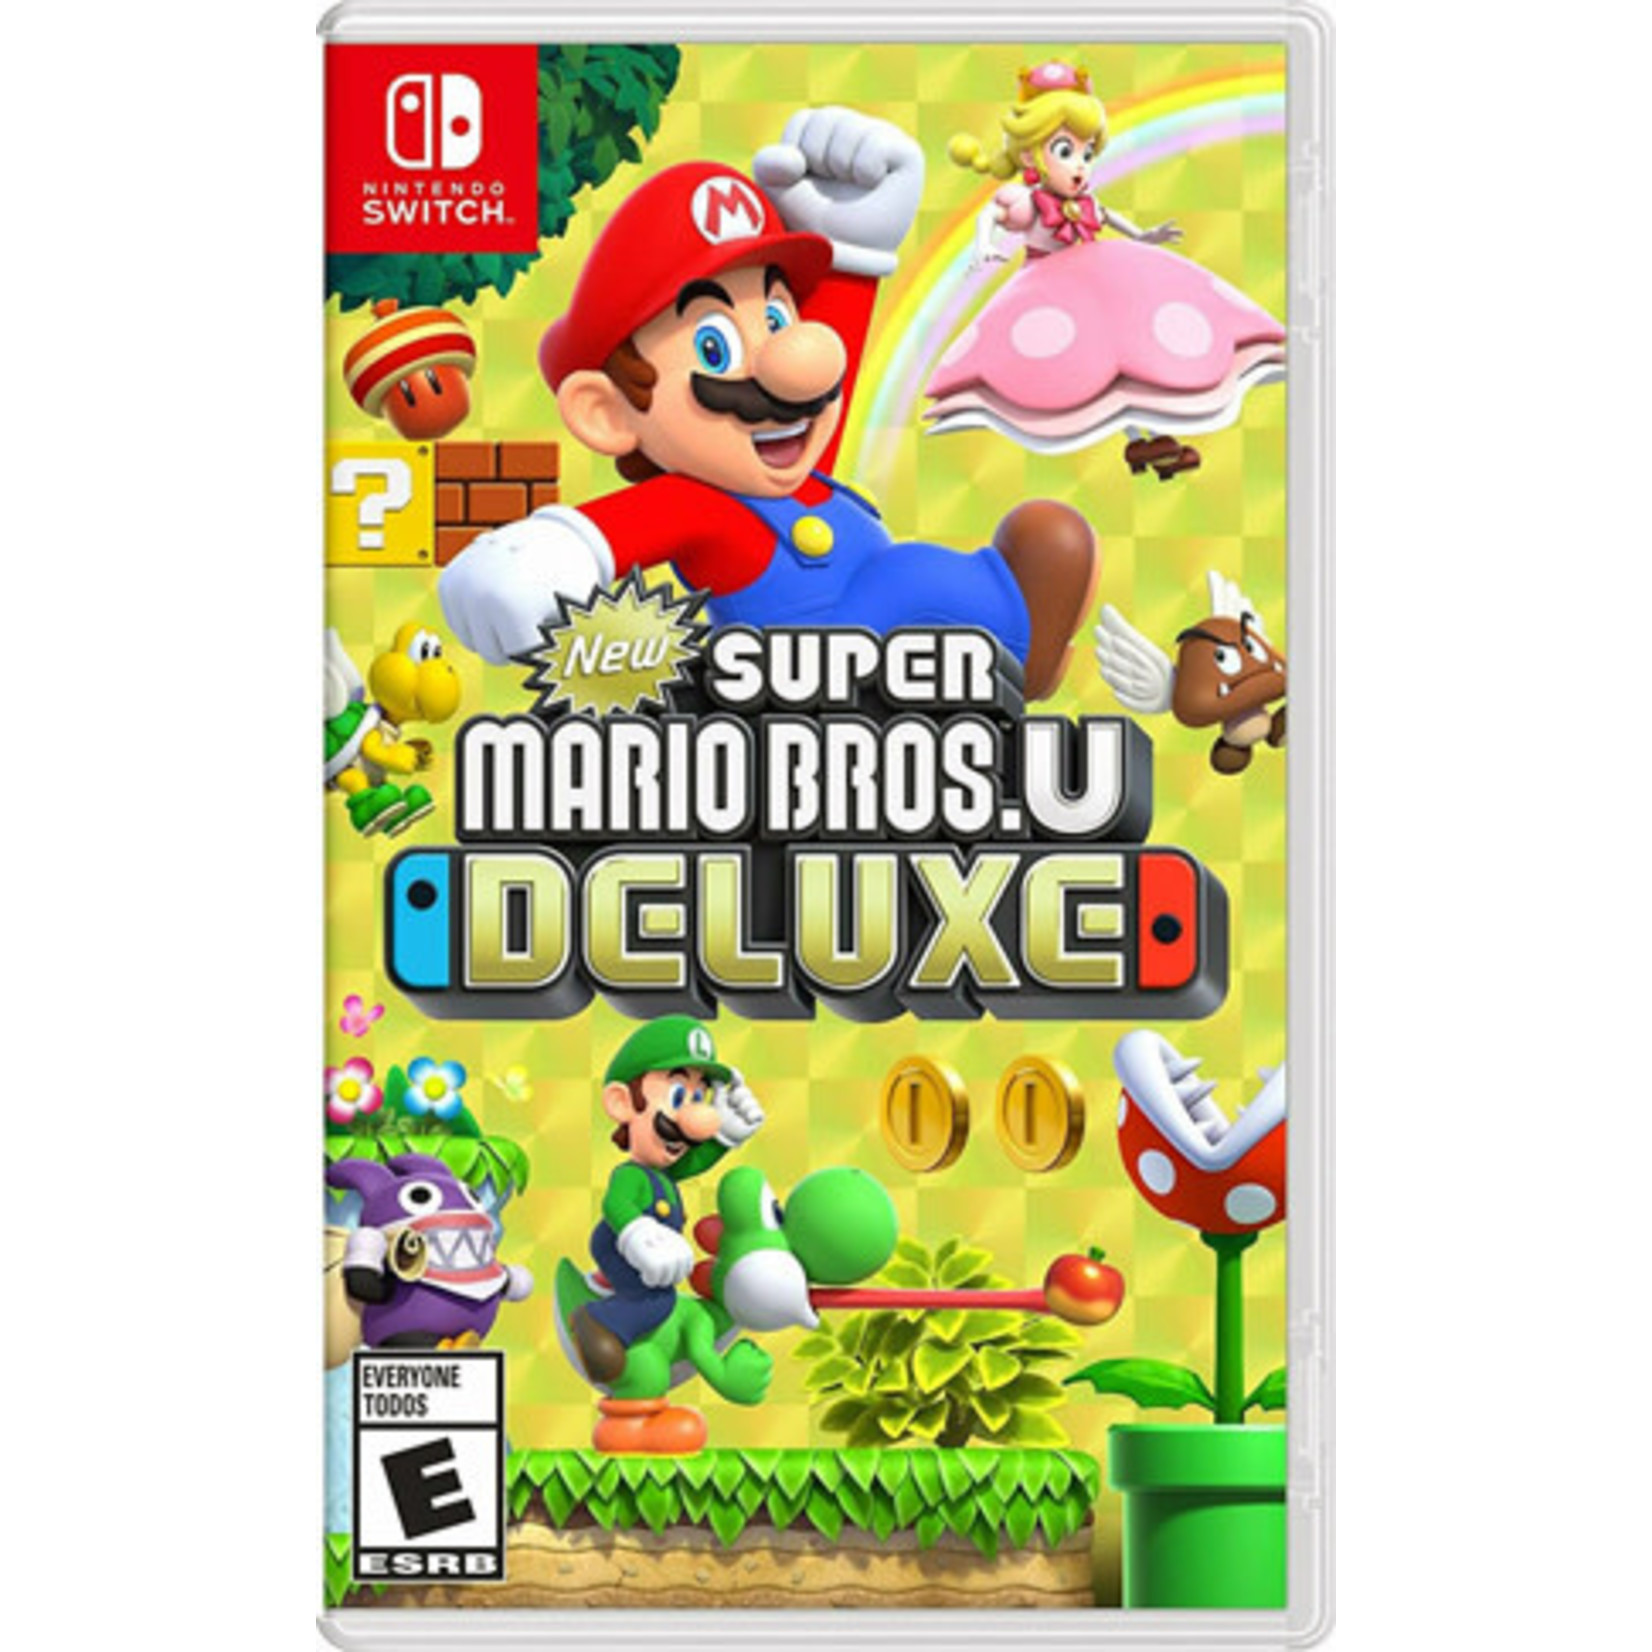 SWITCH-New Super Mario Bros U Deluxe